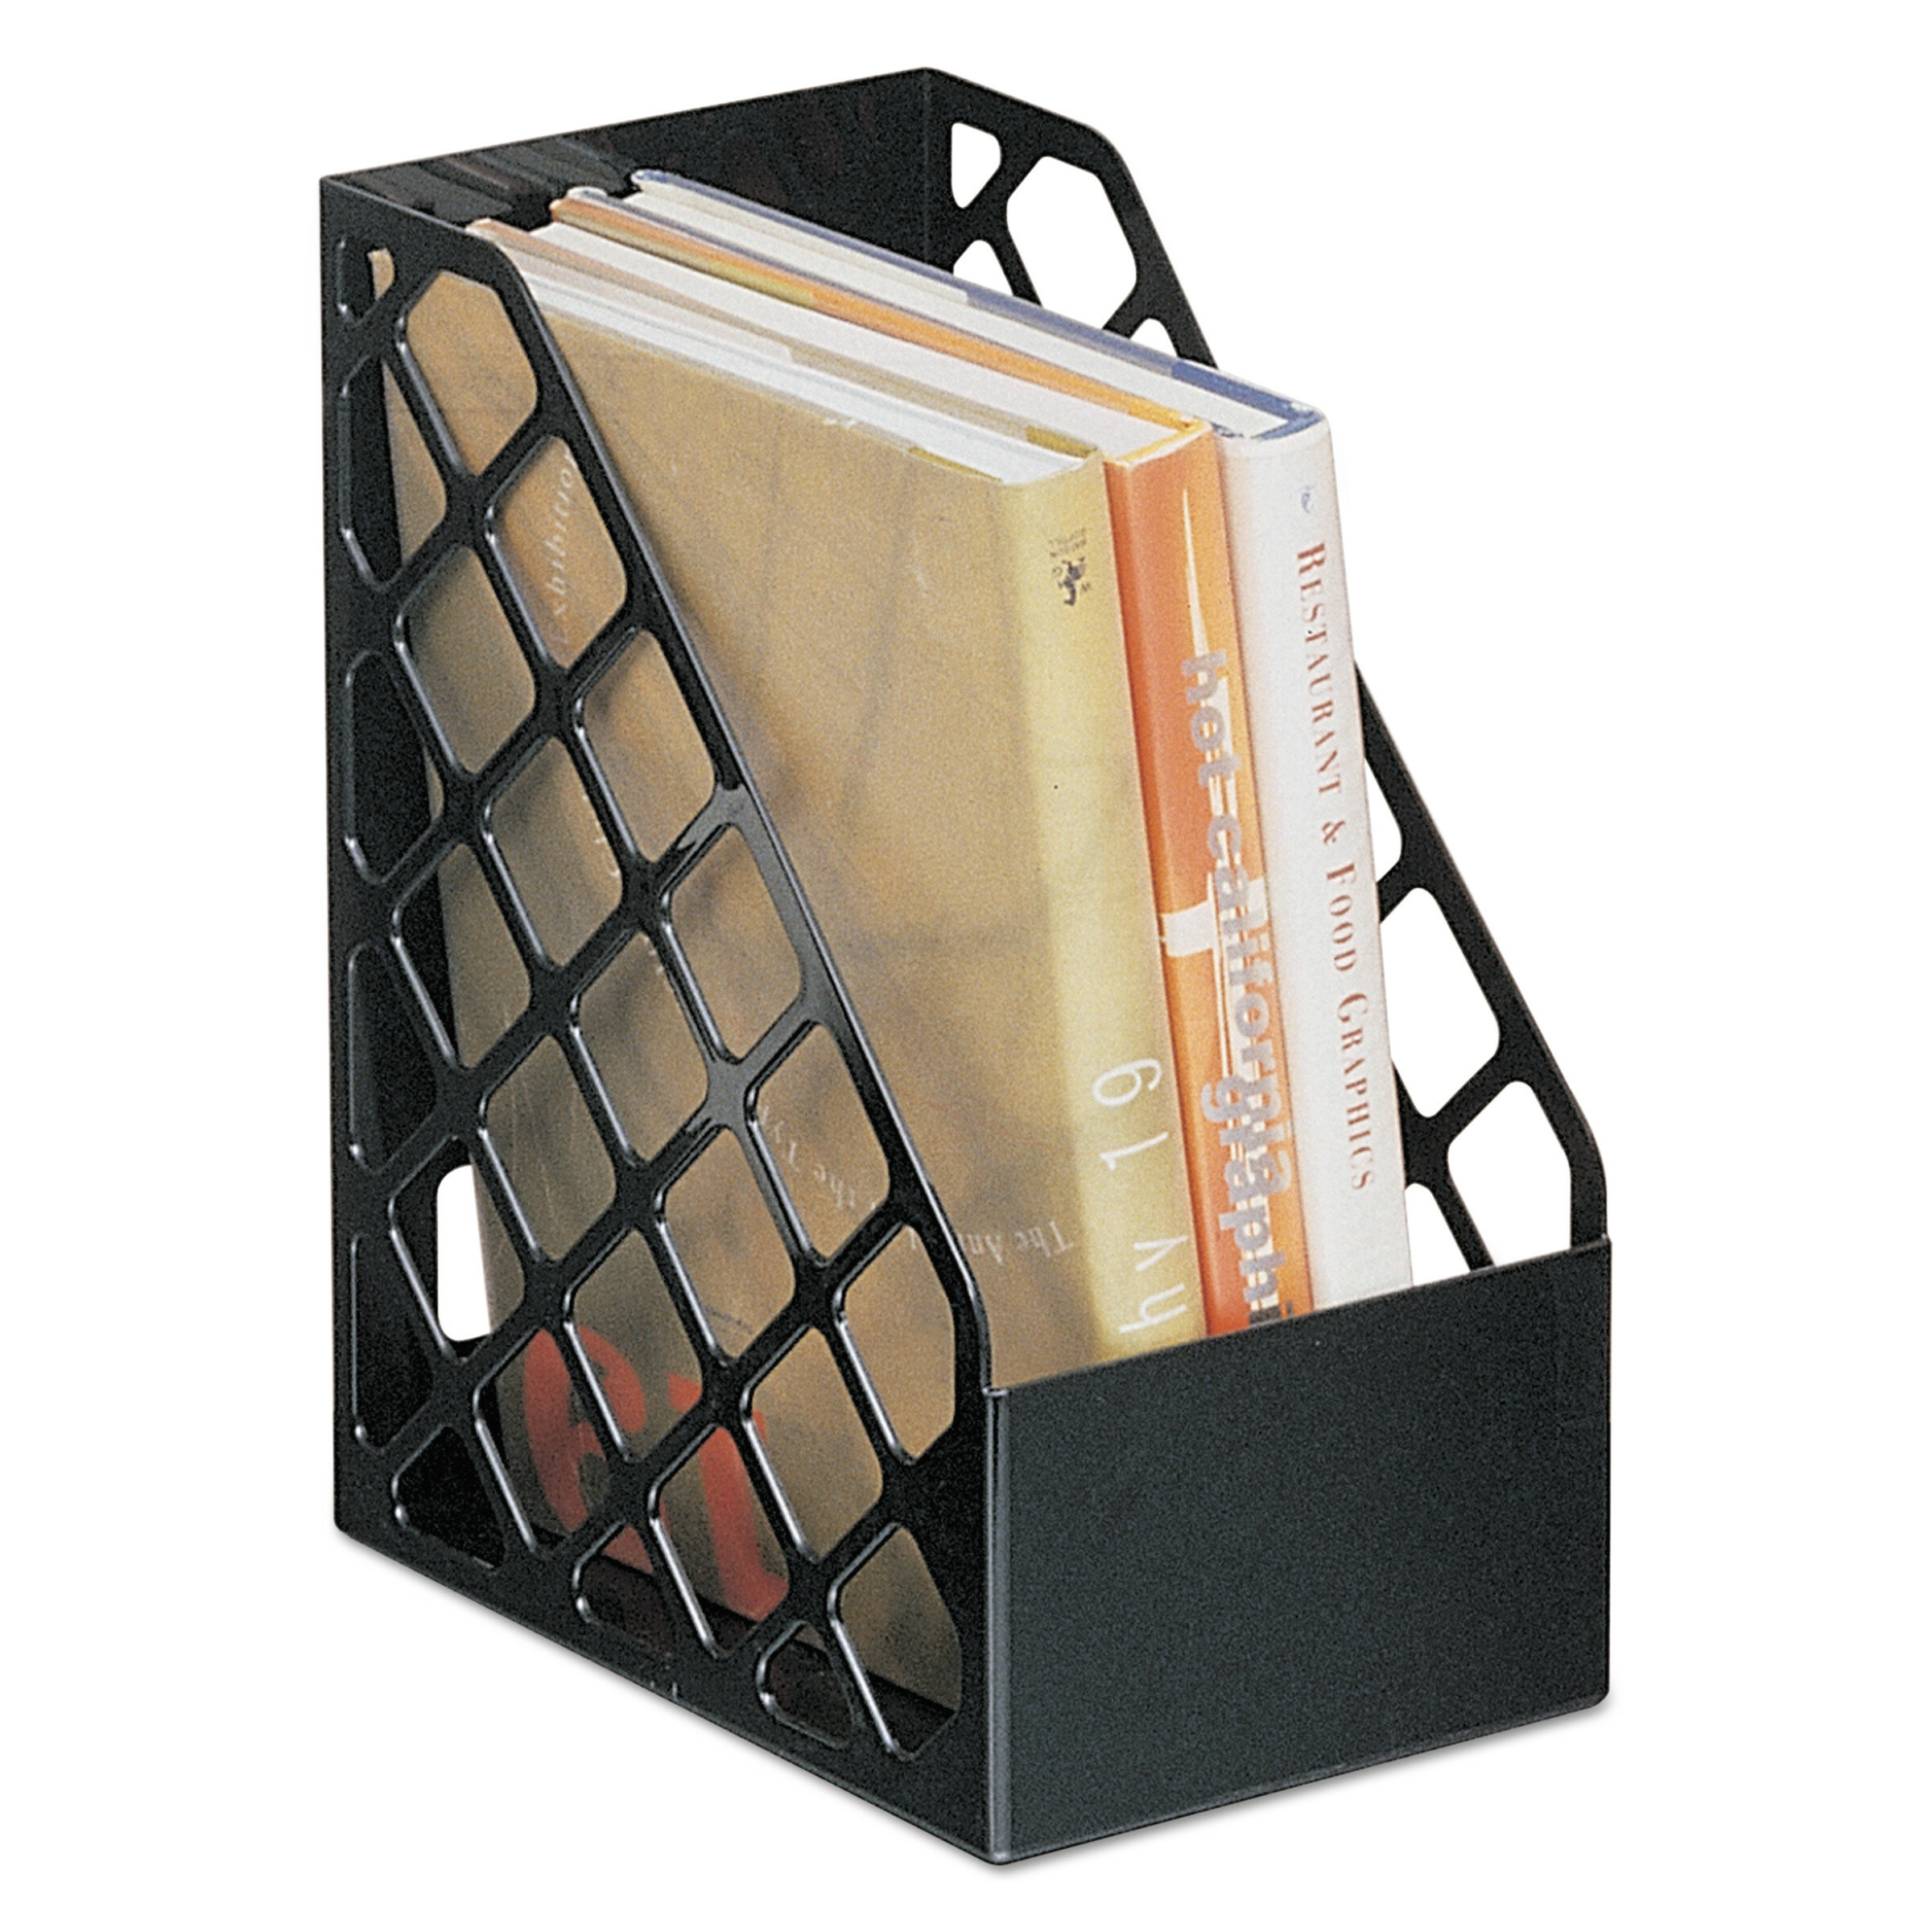 Evelots 3-Compartment File & Magazine Holder-Desktop/Organizer-Sturdy Plastic